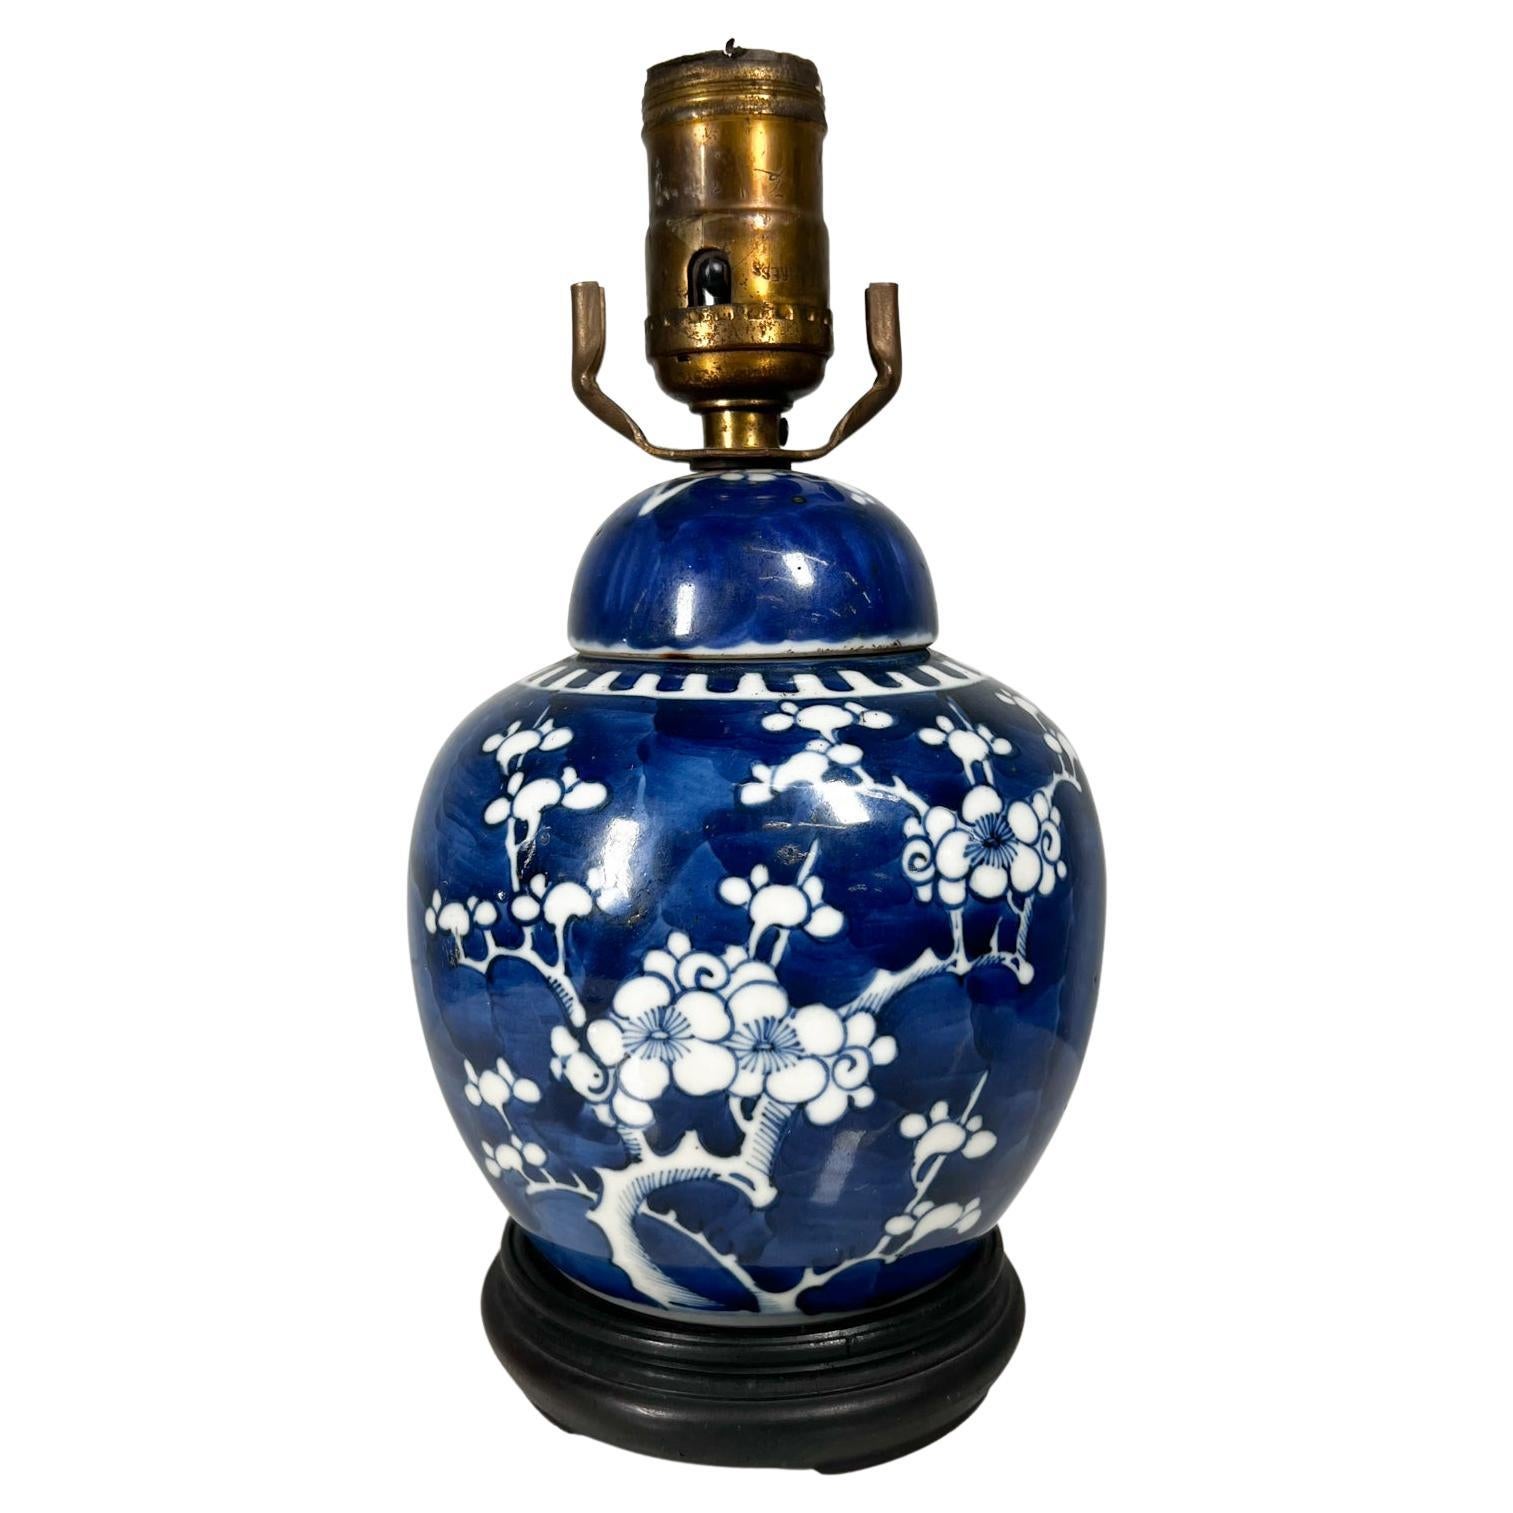 1950s Lovely Porcelain Table Lamp Asian Ginger Jar Chinoiserie Blue and White